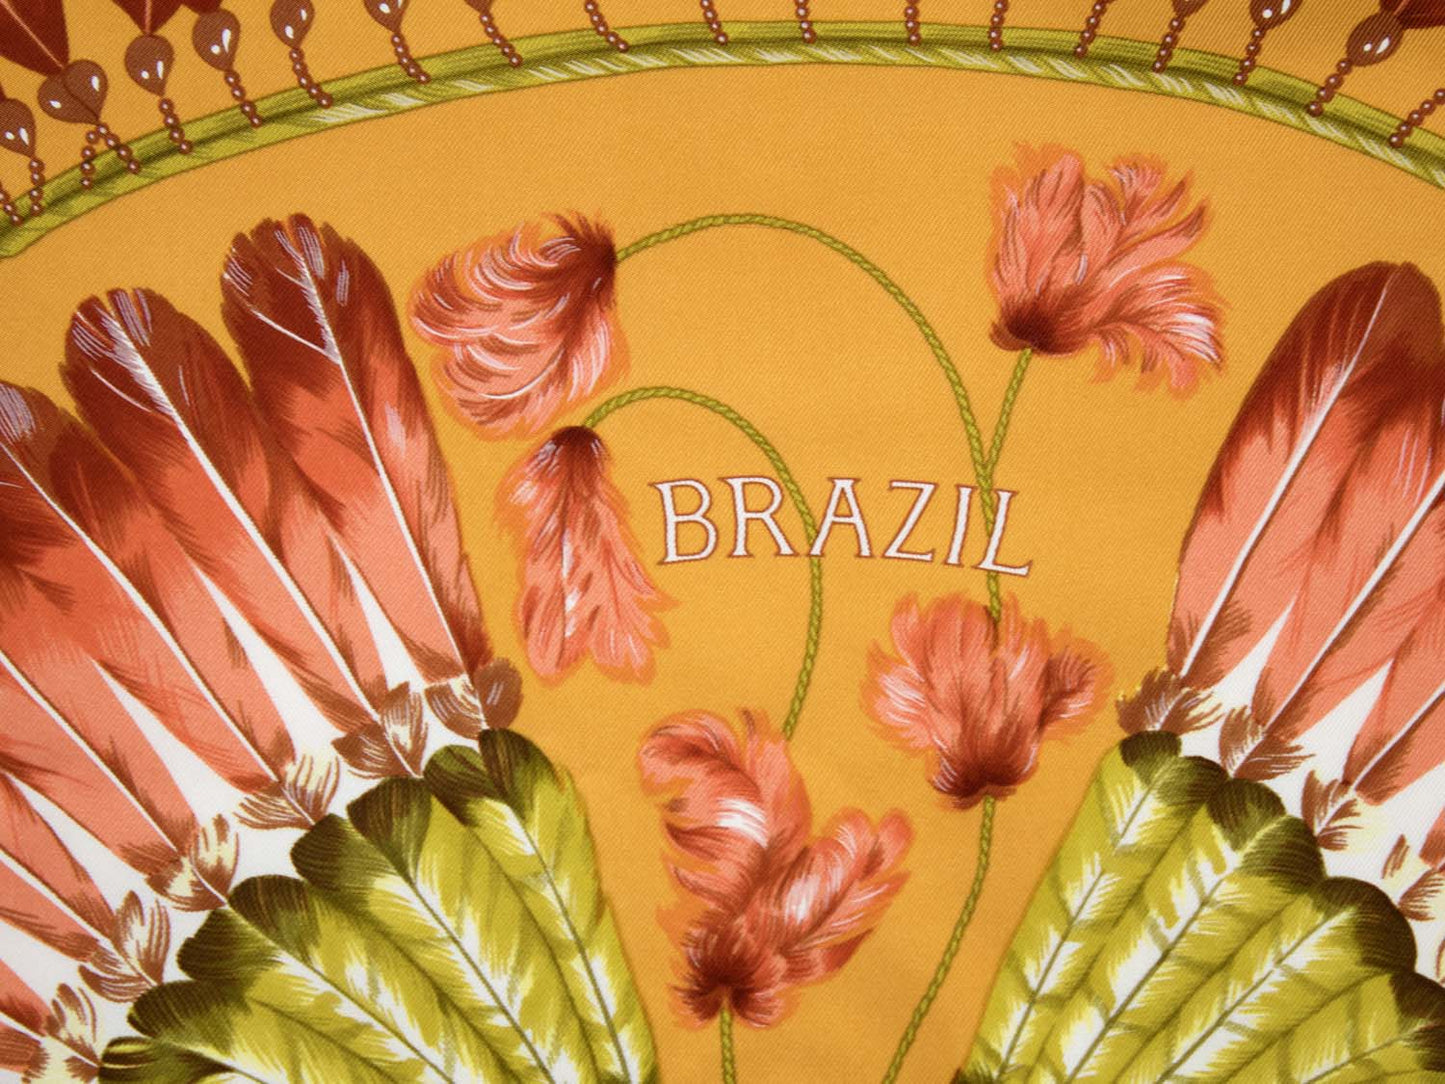 Hermès Foulard Brazil di Laurence Bourthoumieux